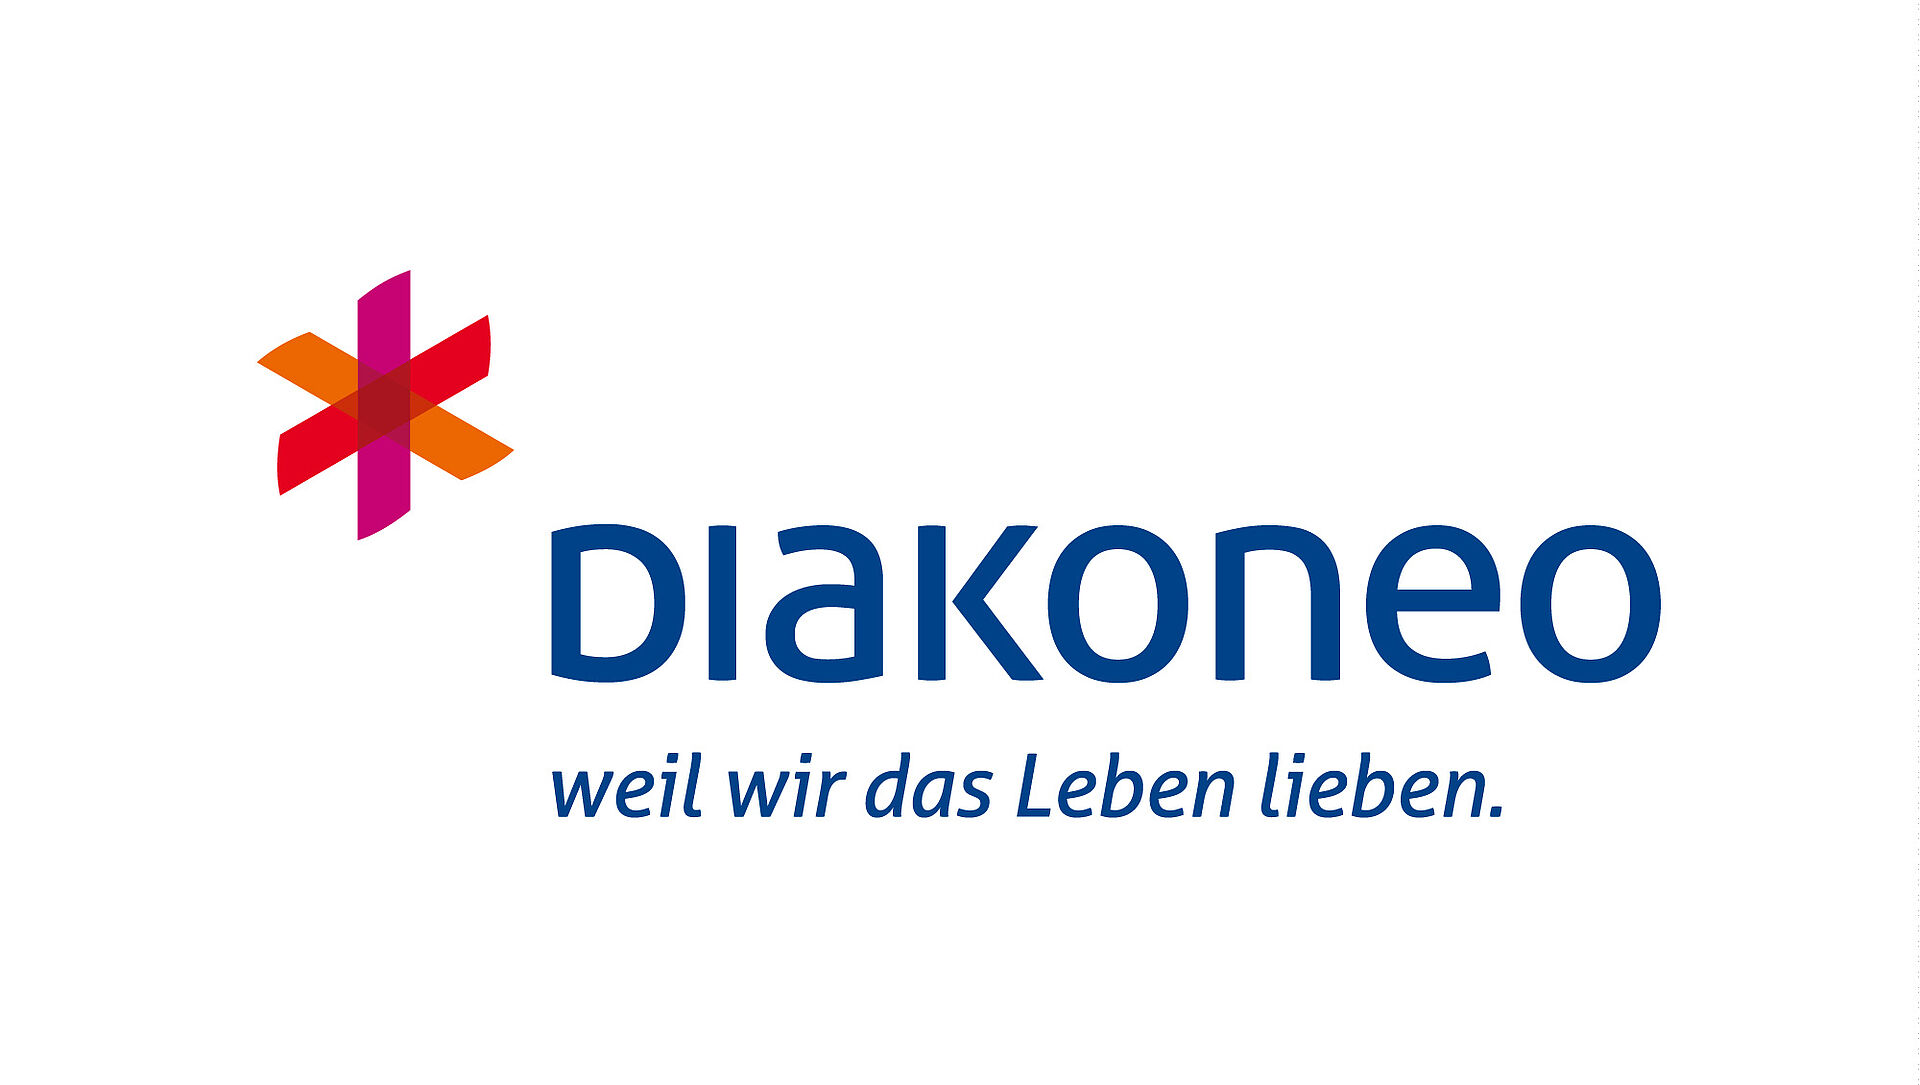 Diakoneo: neue Marke